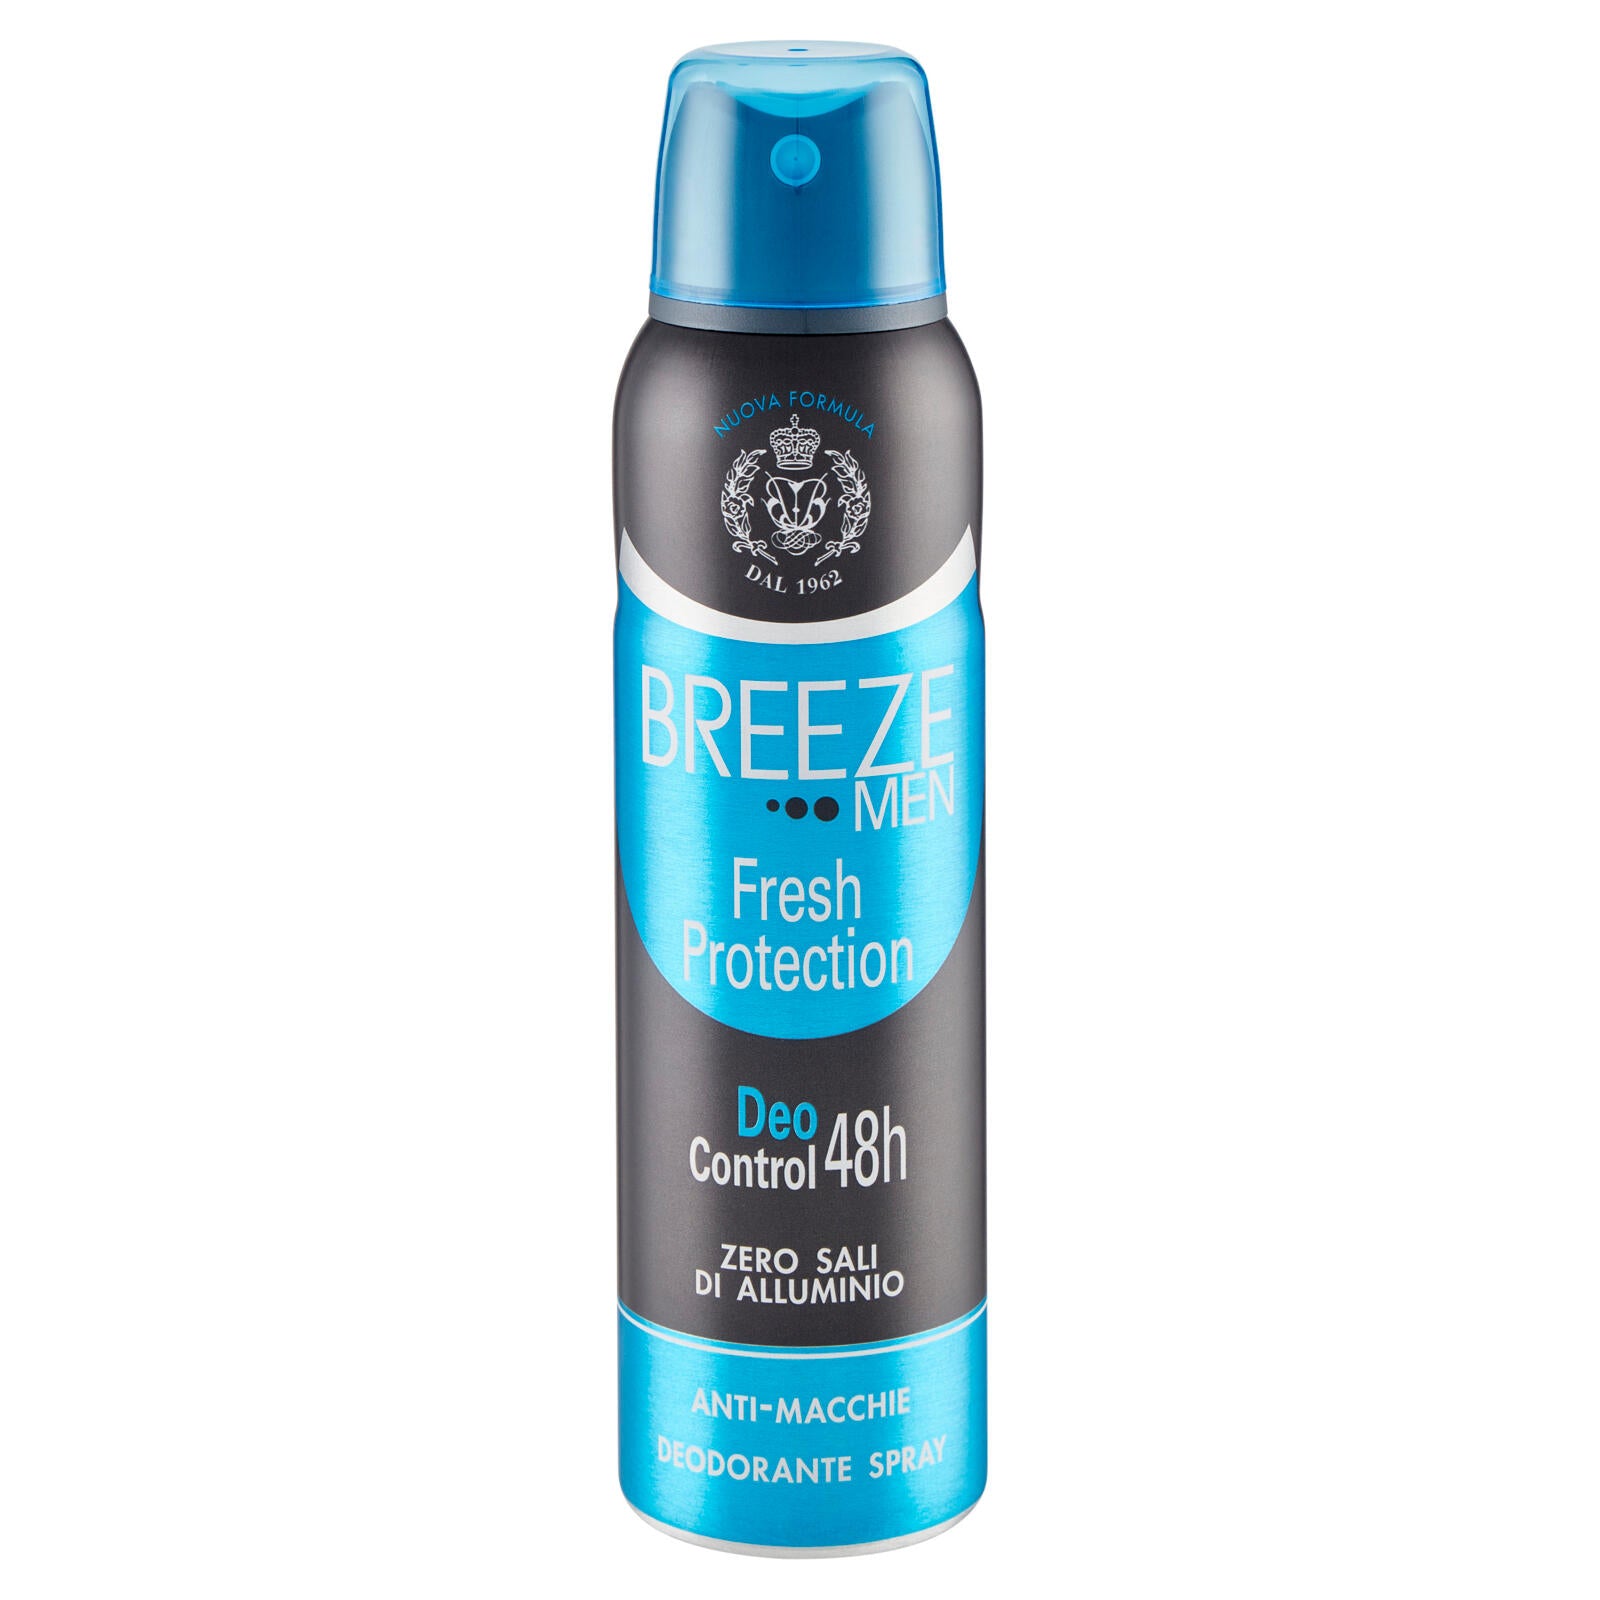 Breeze Men Fresh Protection Deodorante Spray 150 mL ->